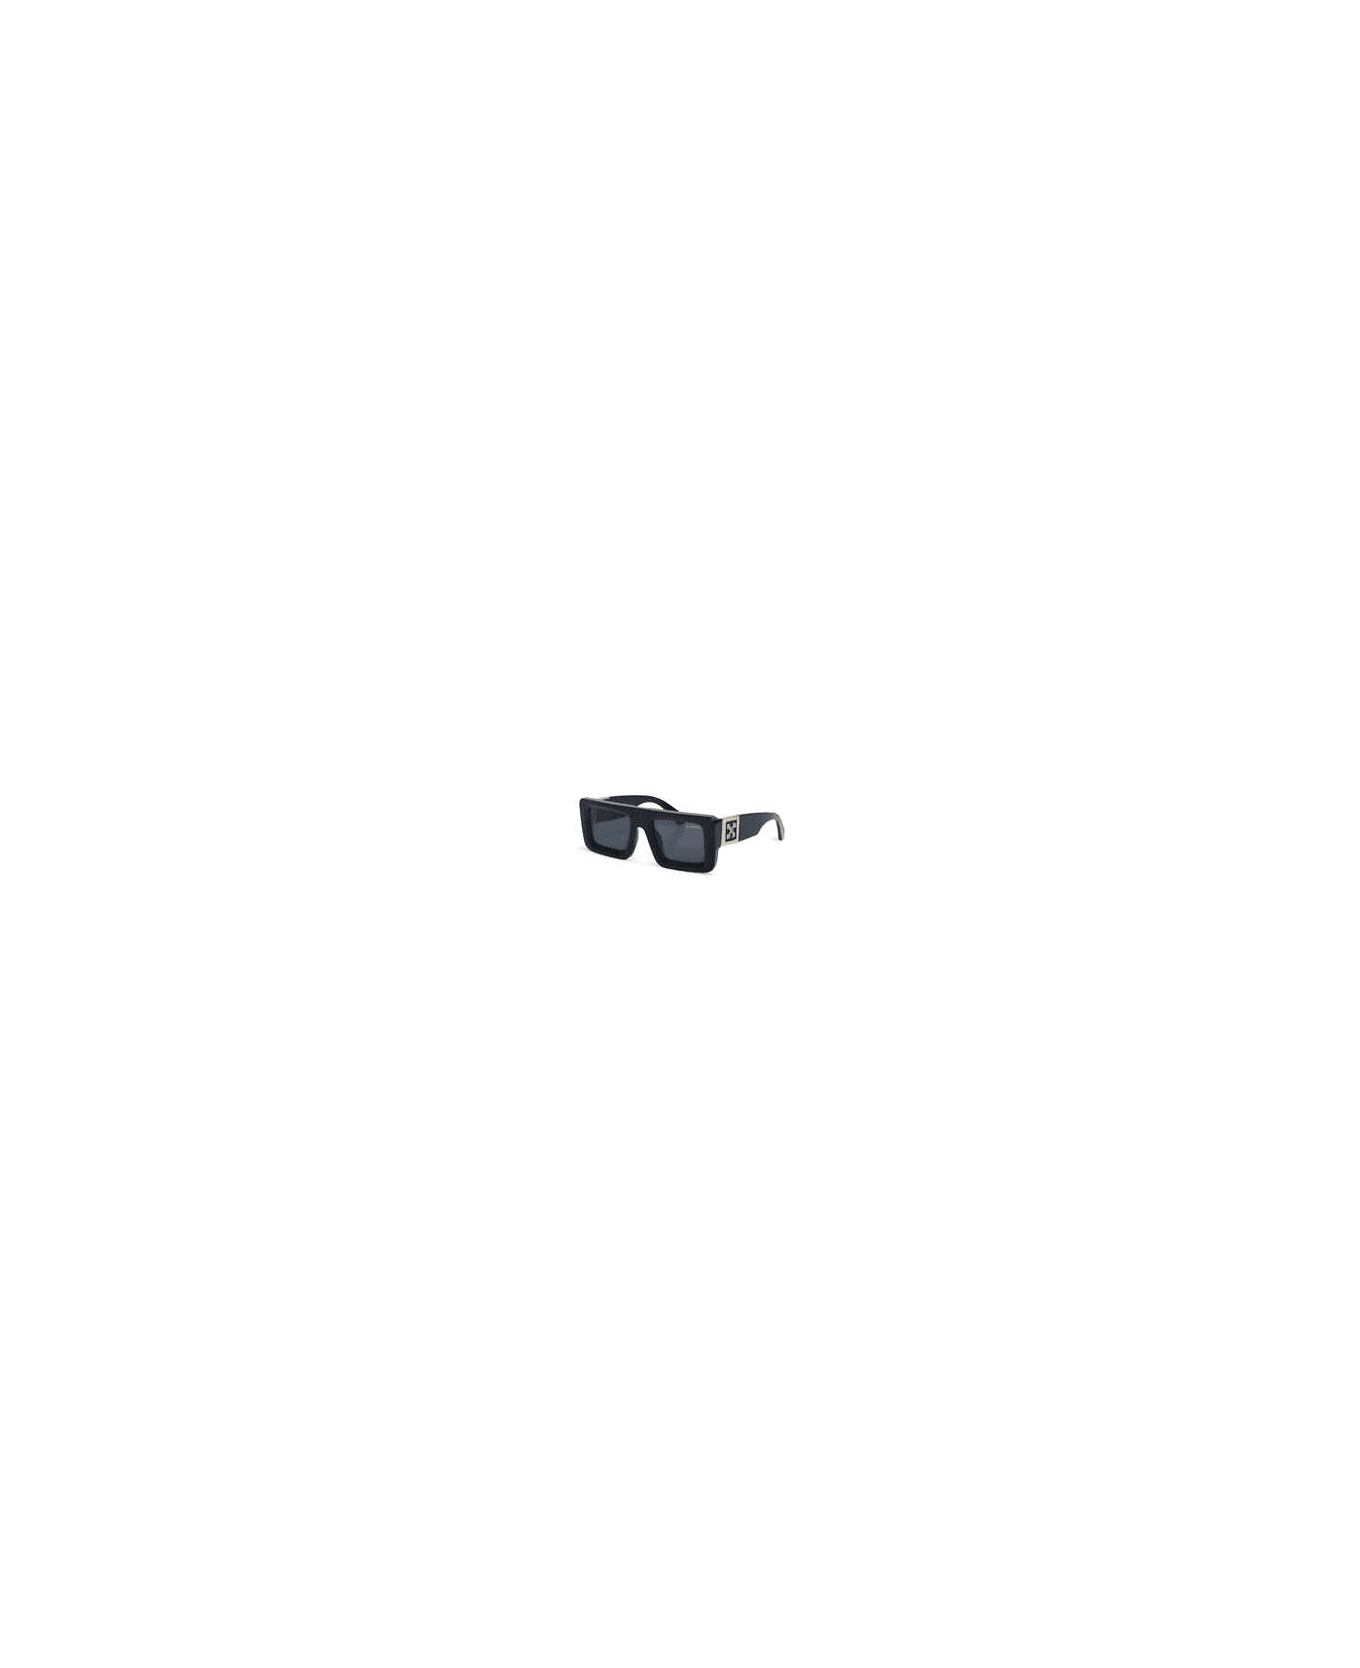 Off-White LEONARDO SUNGLASSES Sunglasses - Black サングラス